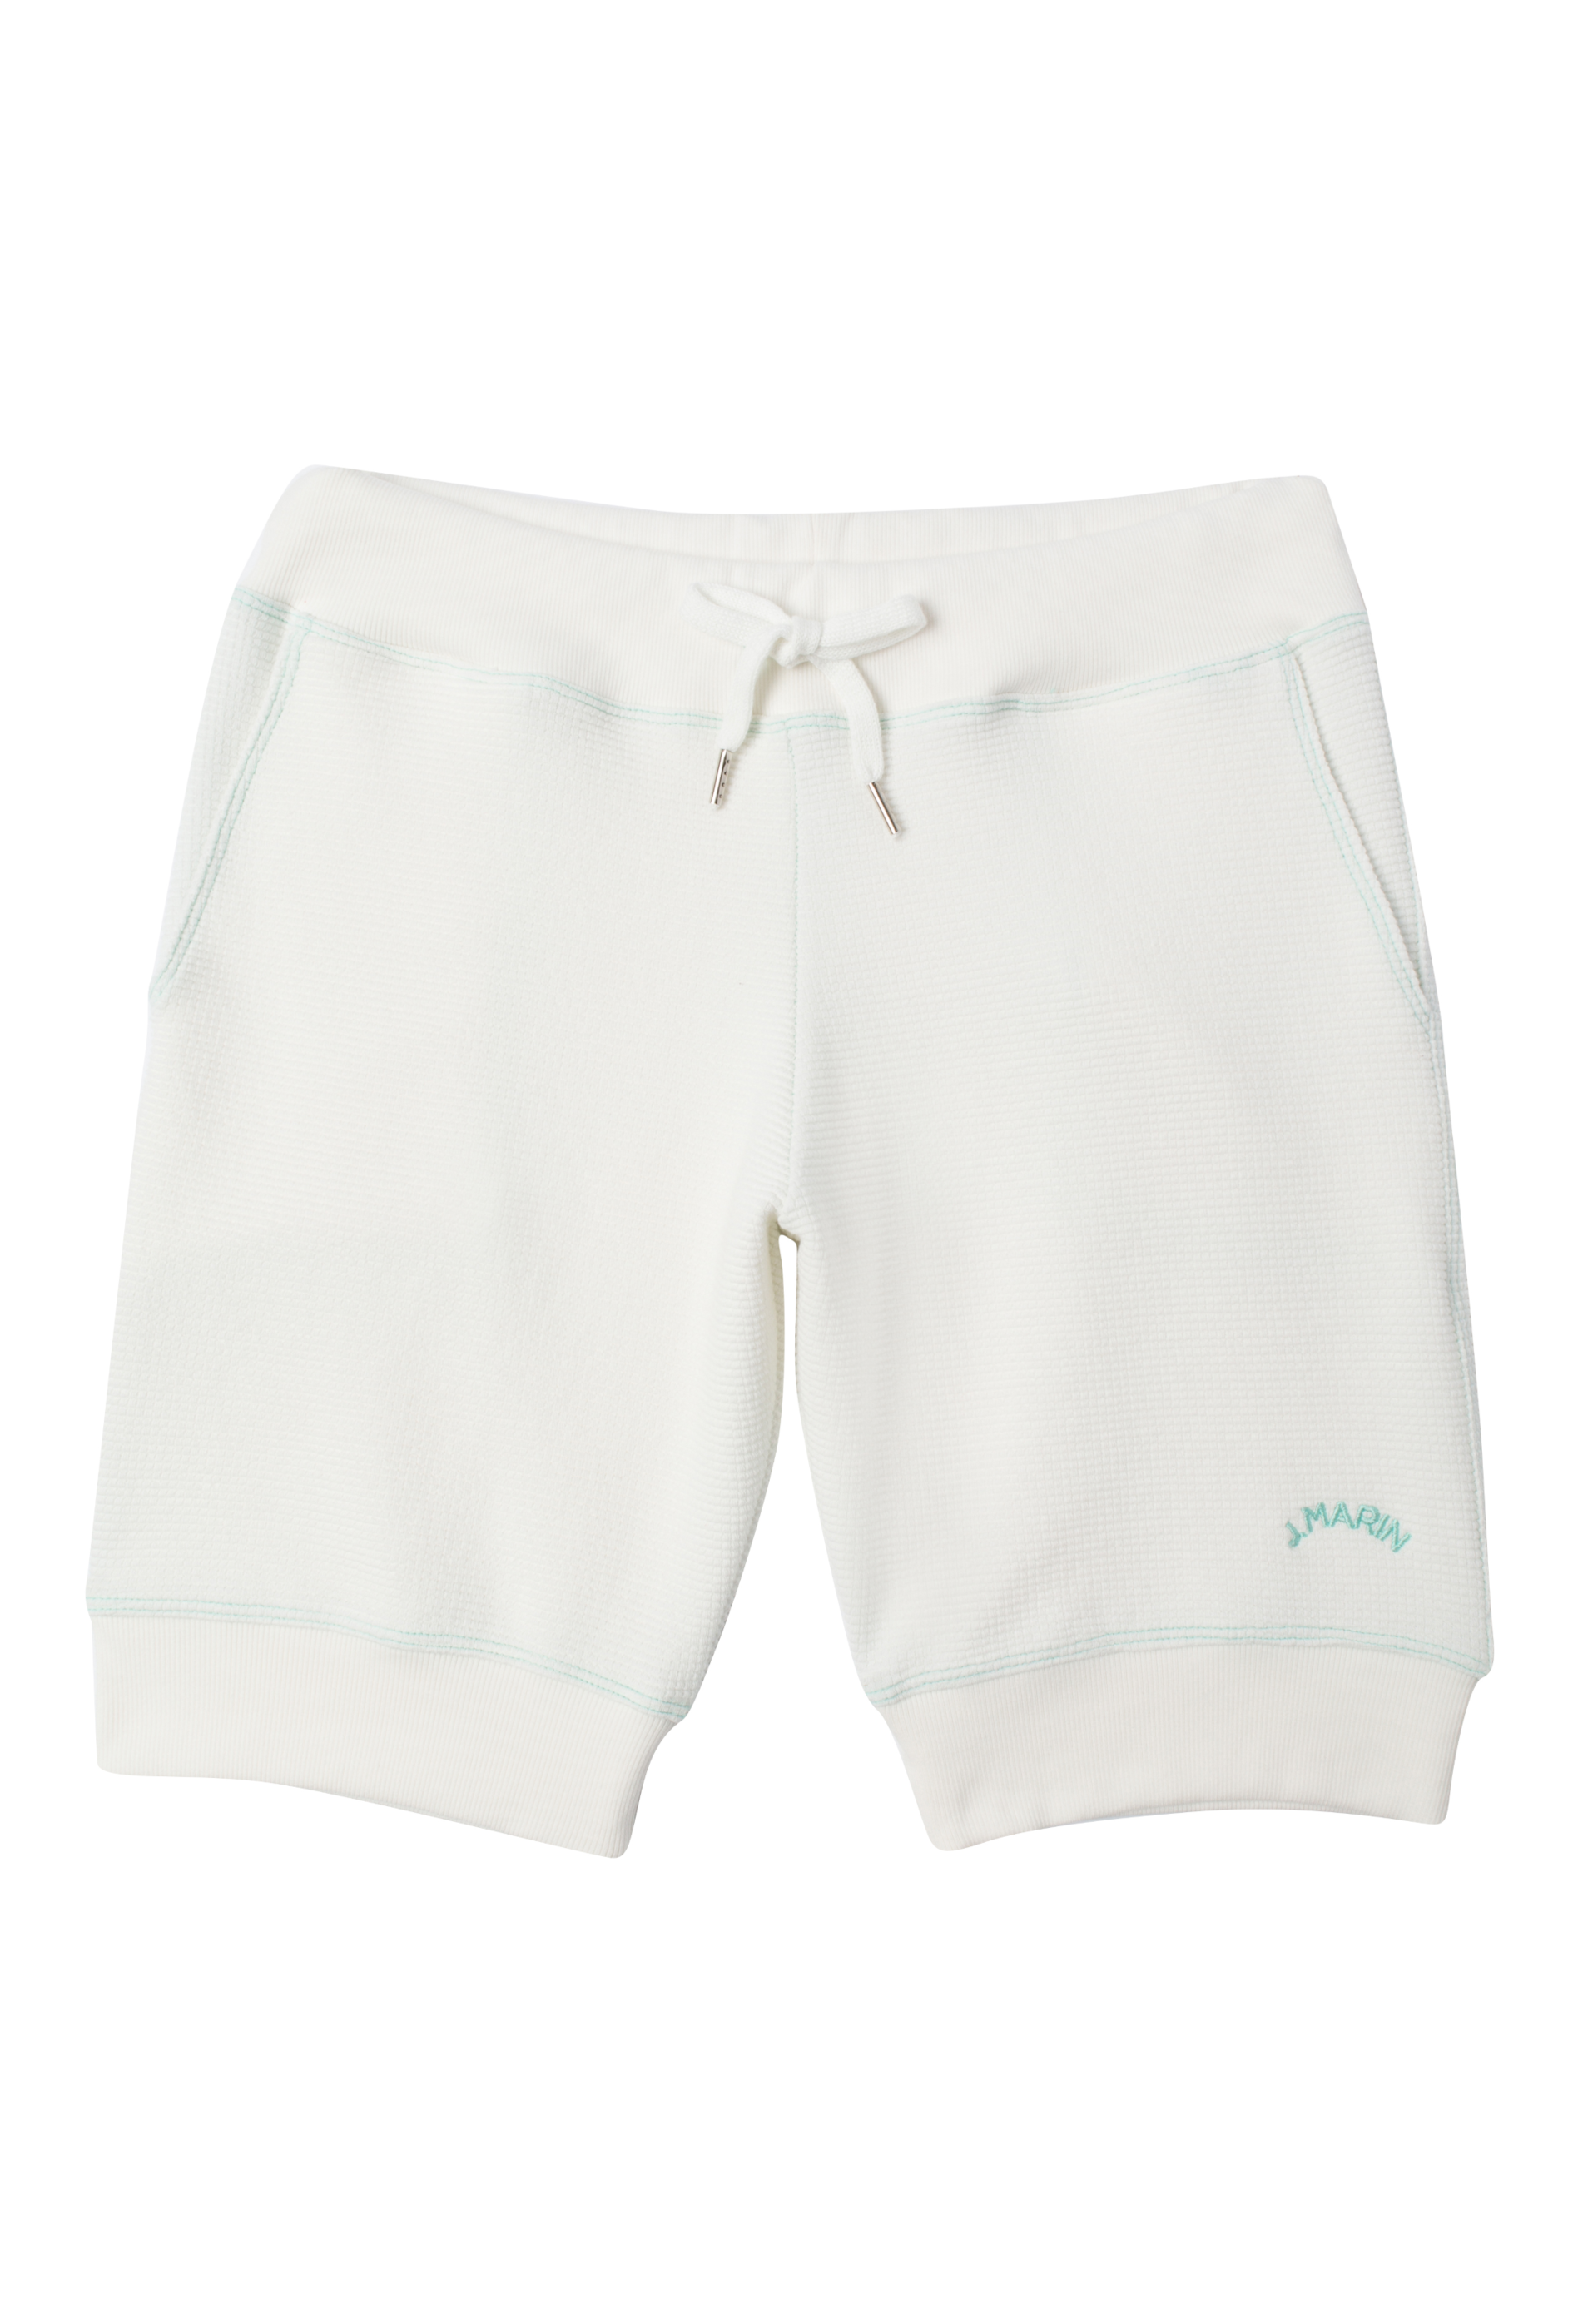 Vintage-Style Thermal Knicker Beach Shorts - Organic Cotton - Natural/Marine Green Stitch - J. Marin